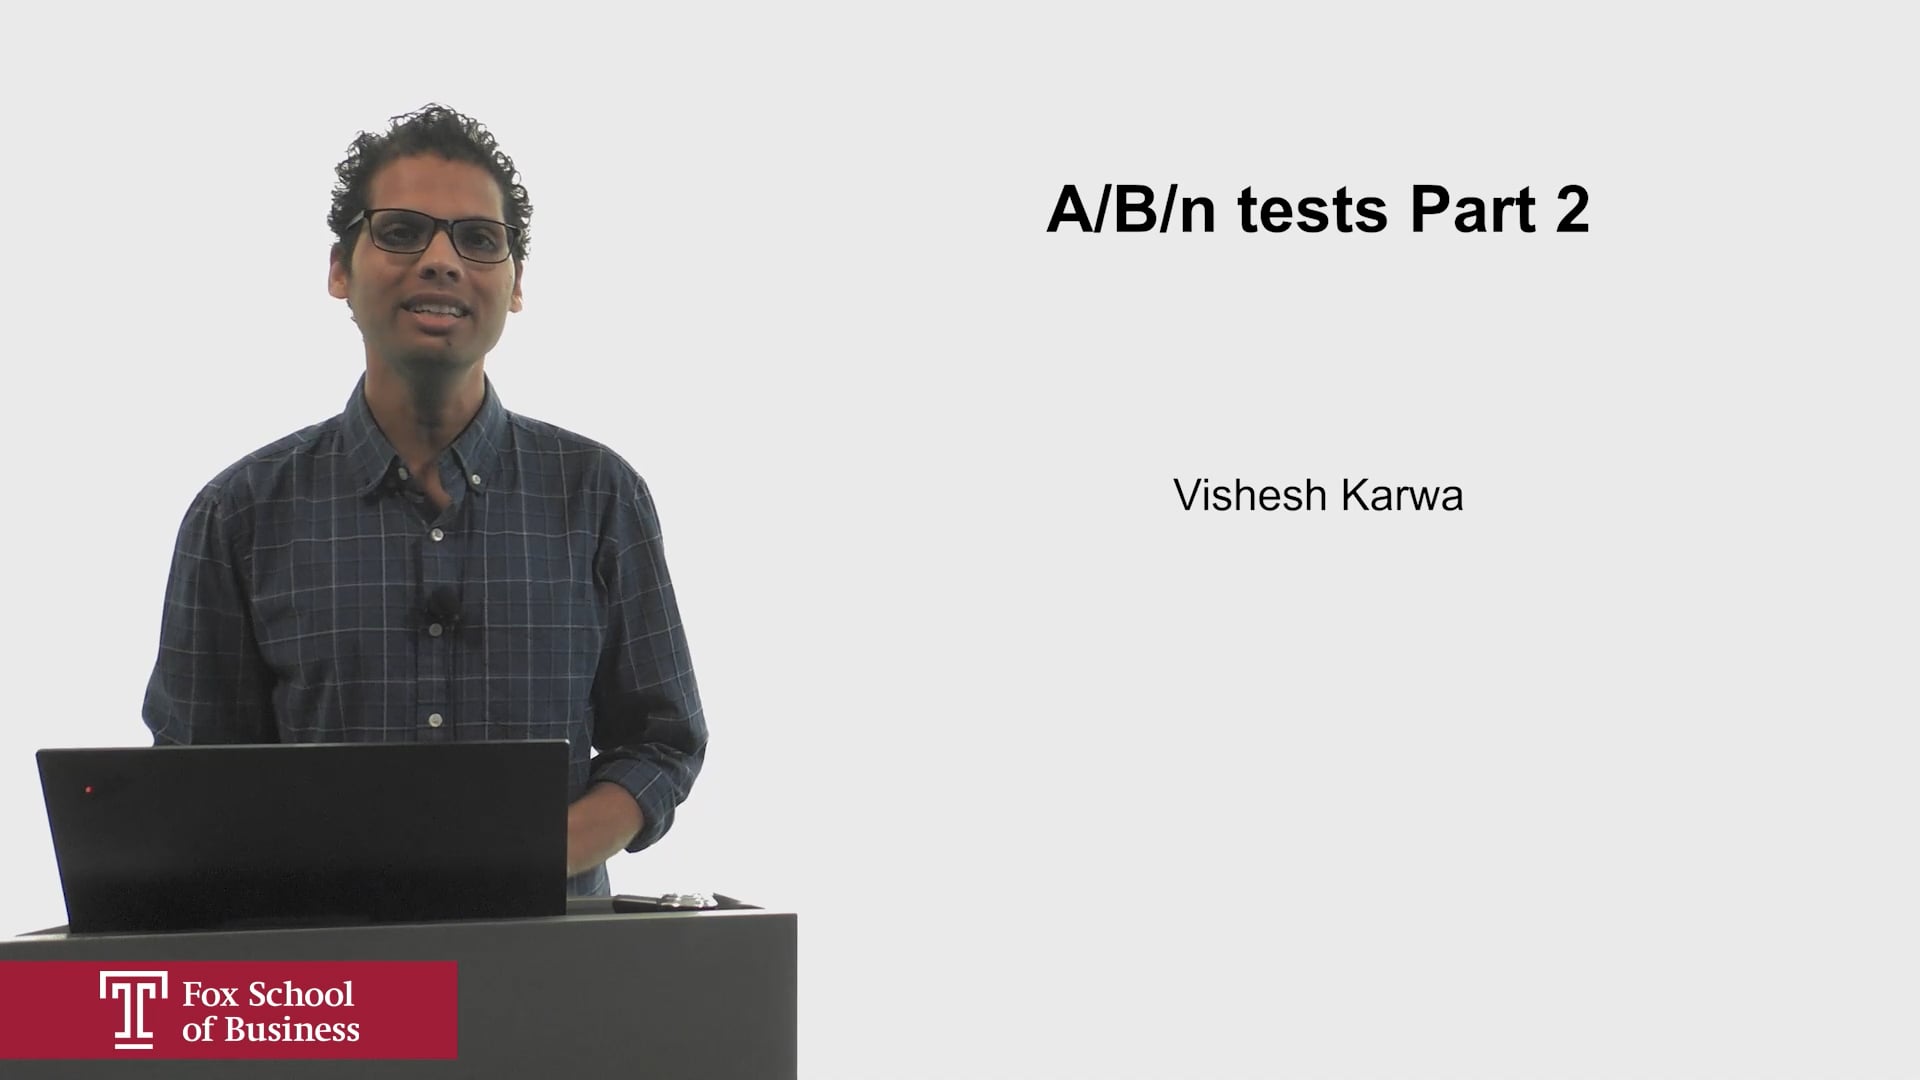 A/B/n Tests Part 2